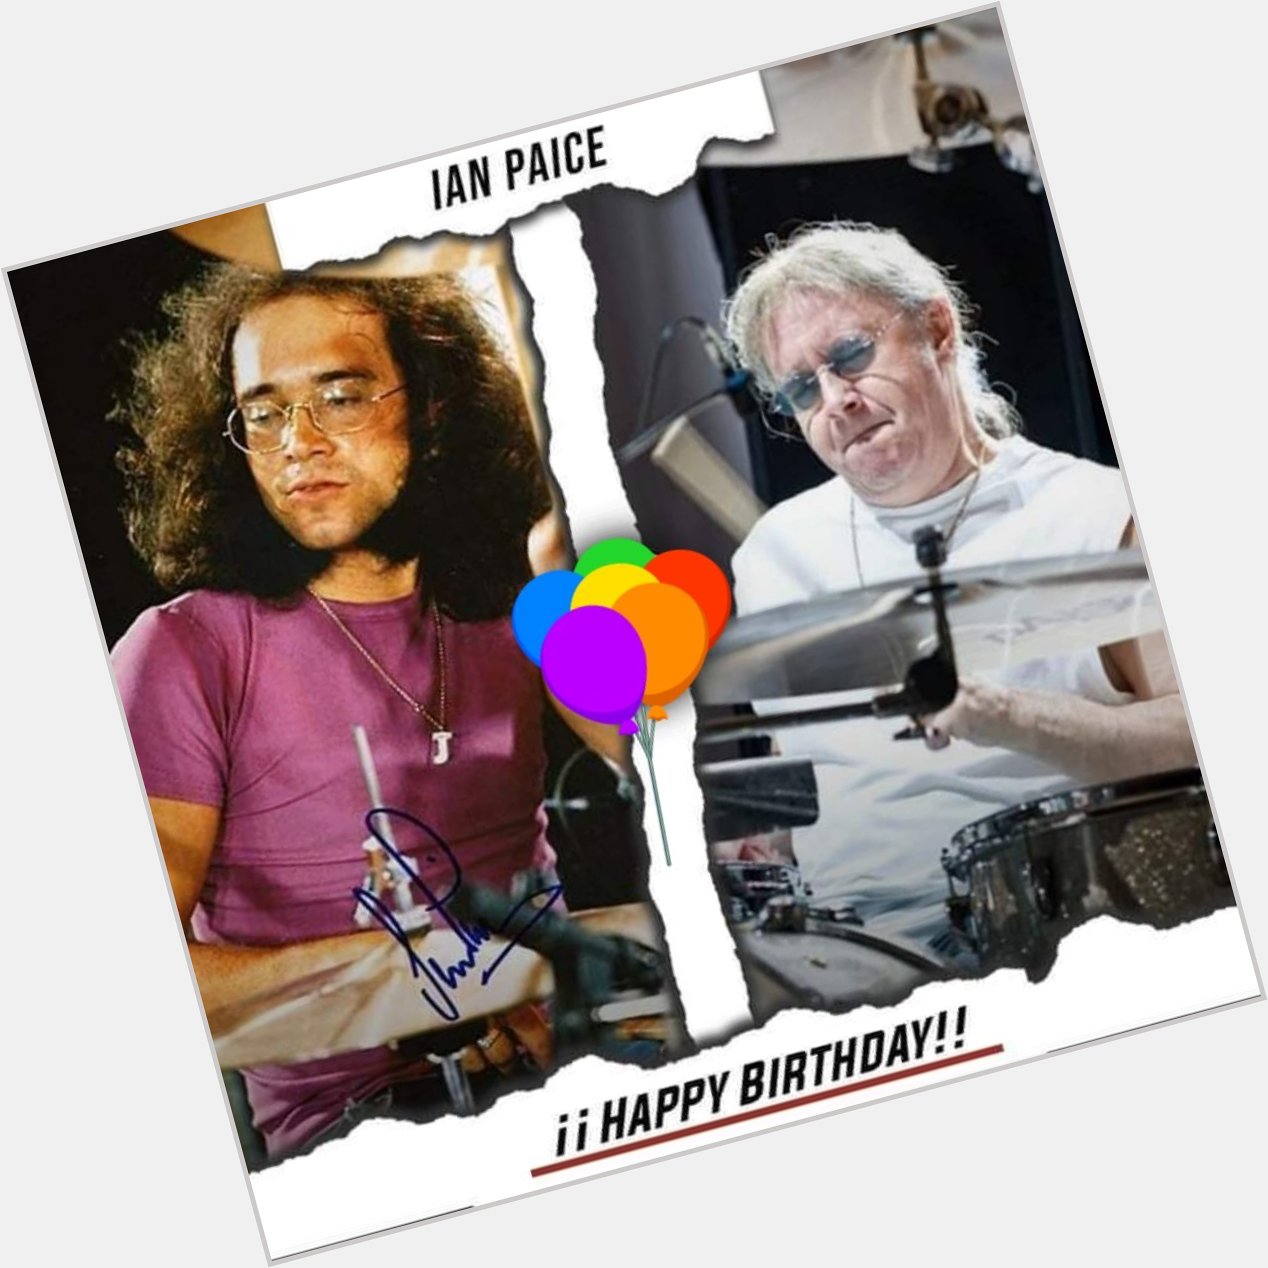 Happy birthday  Ian Paice June 29, 1948
Great drummer,  founding member of Deep Purple. . 